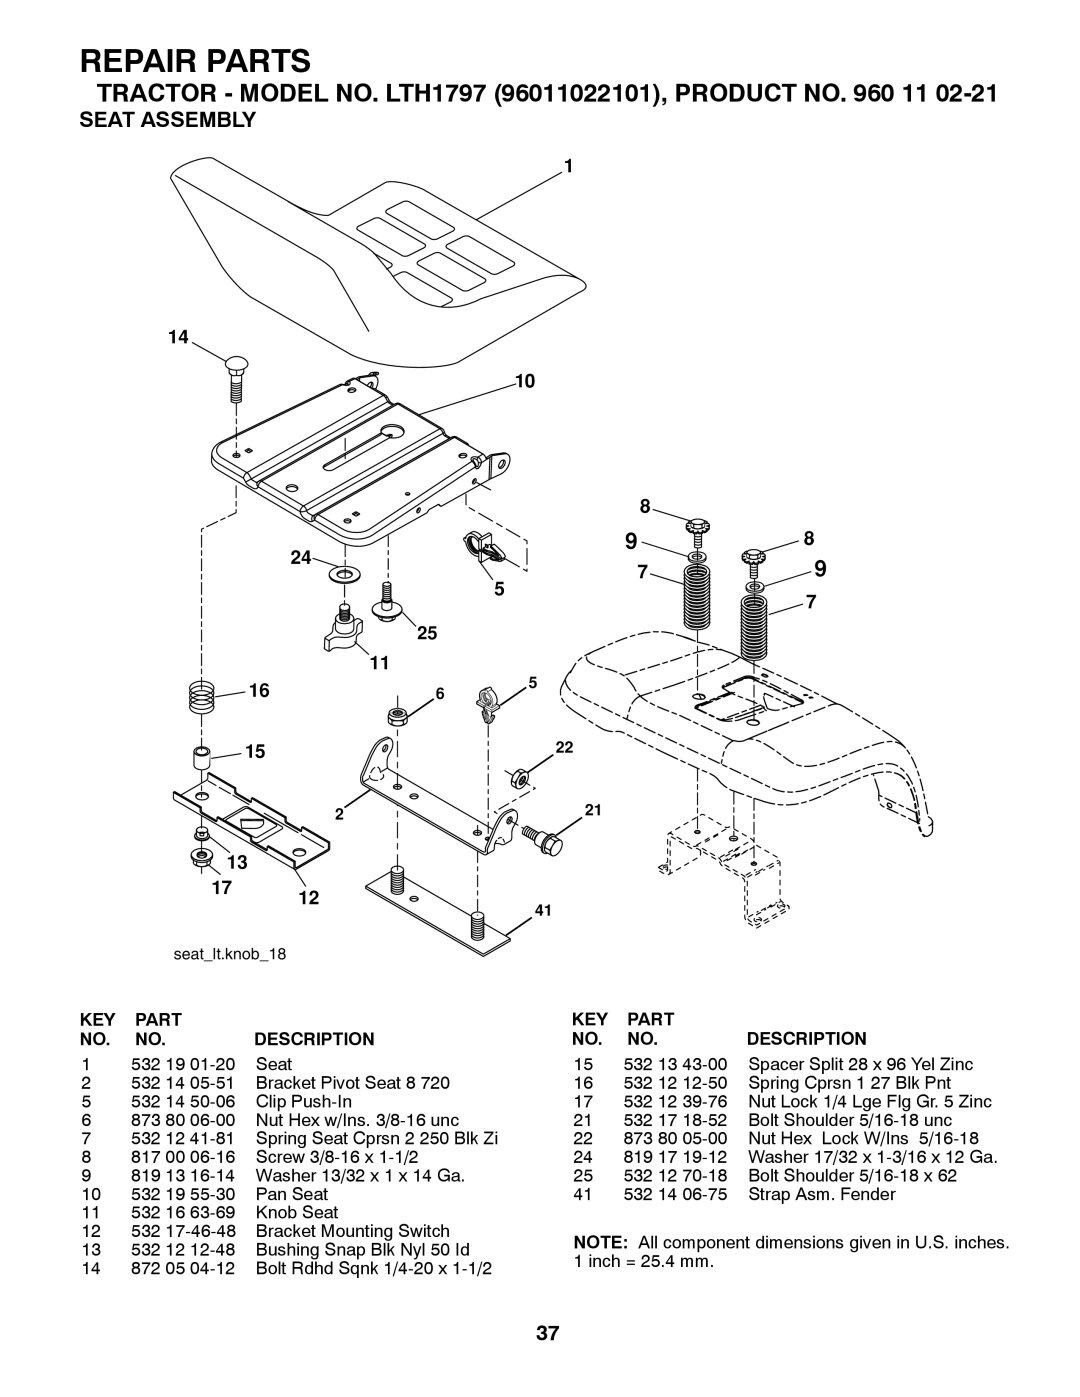 Husqvarna Seat Assembly, Repair Parts, TRACTOR - MODEL NO. LTH1797 96011022101, PRODUCT NO. 960 11, seatlt.knob18 